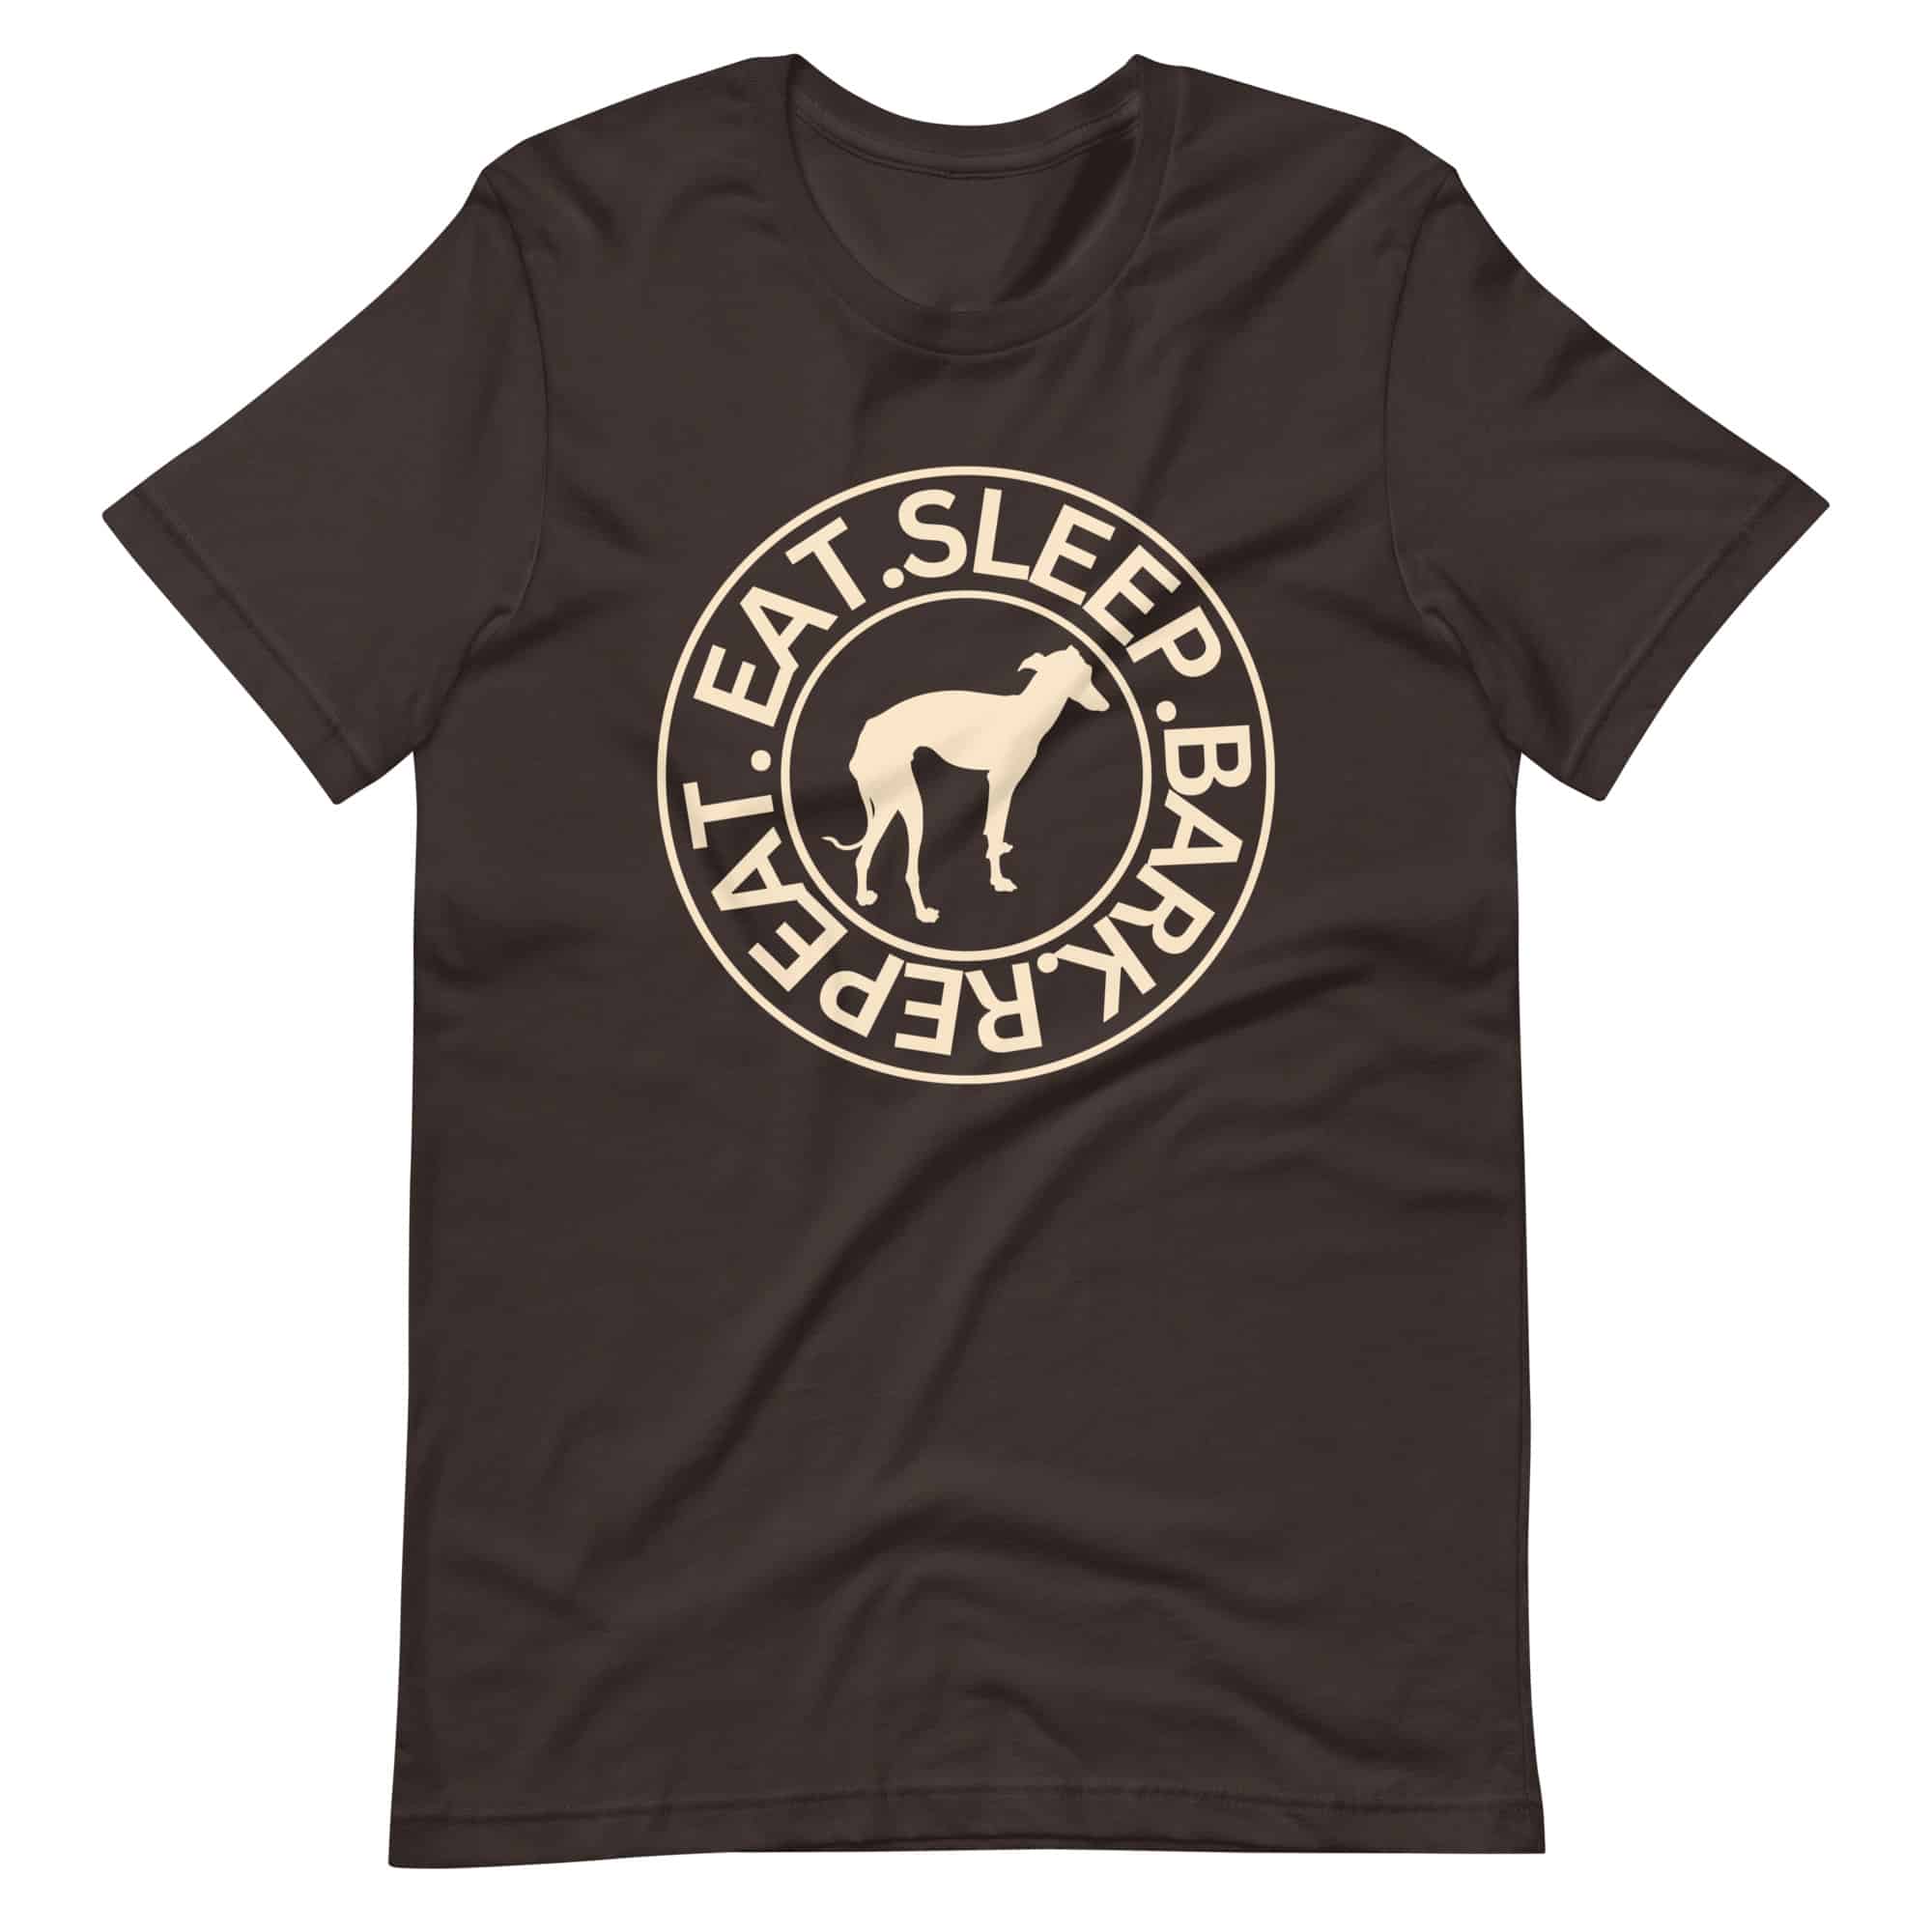 Eat Sleep Bark Repeat Italian Greyhound Unisex T-Shirt. Brown